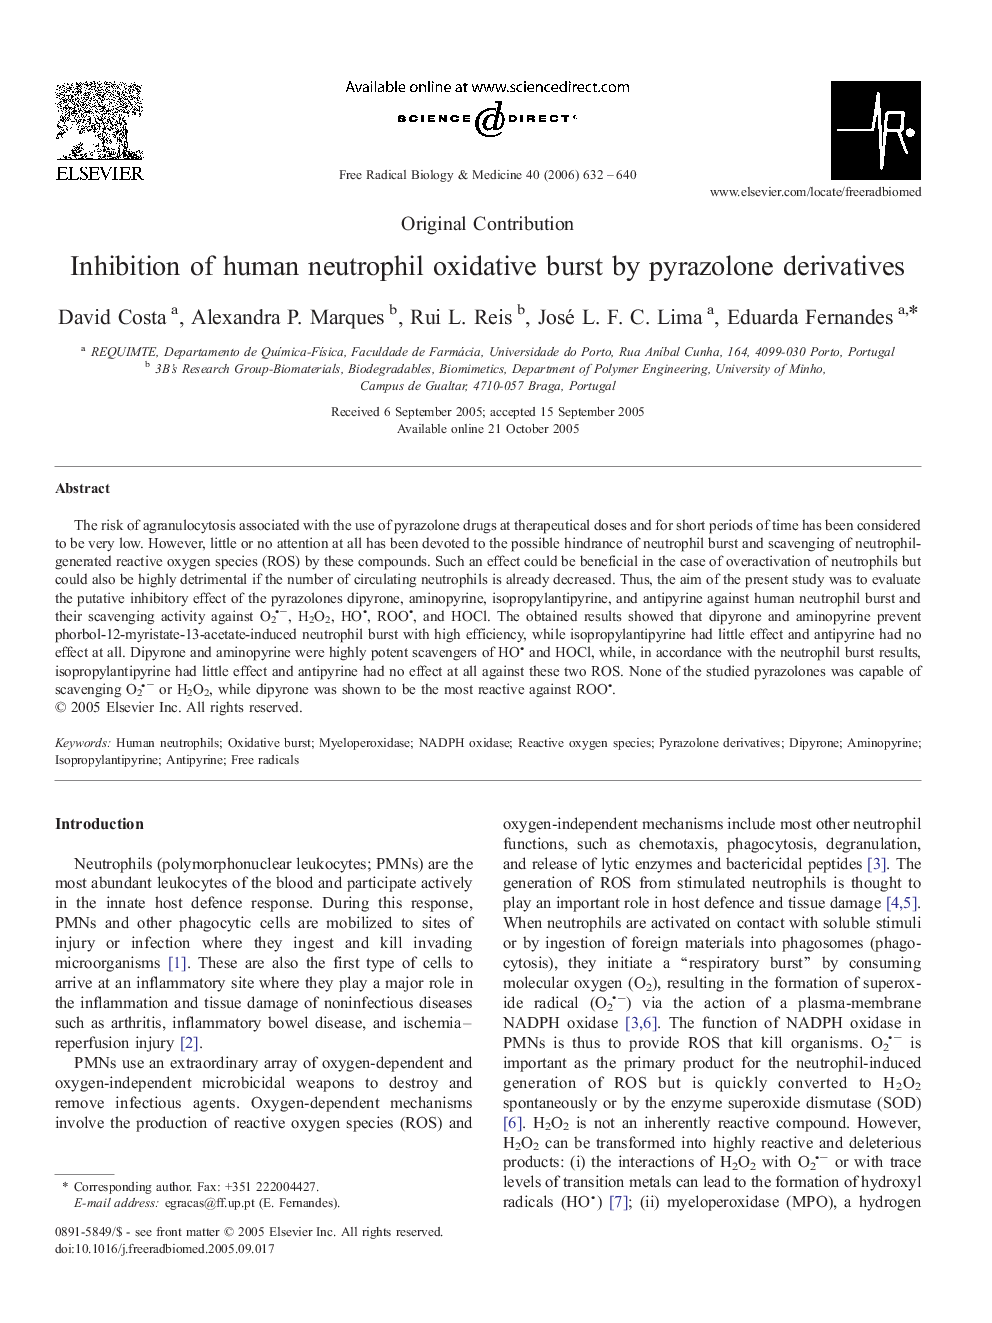 Inhibition of human neutrophil oxidative burst by pyrazolone derivatives